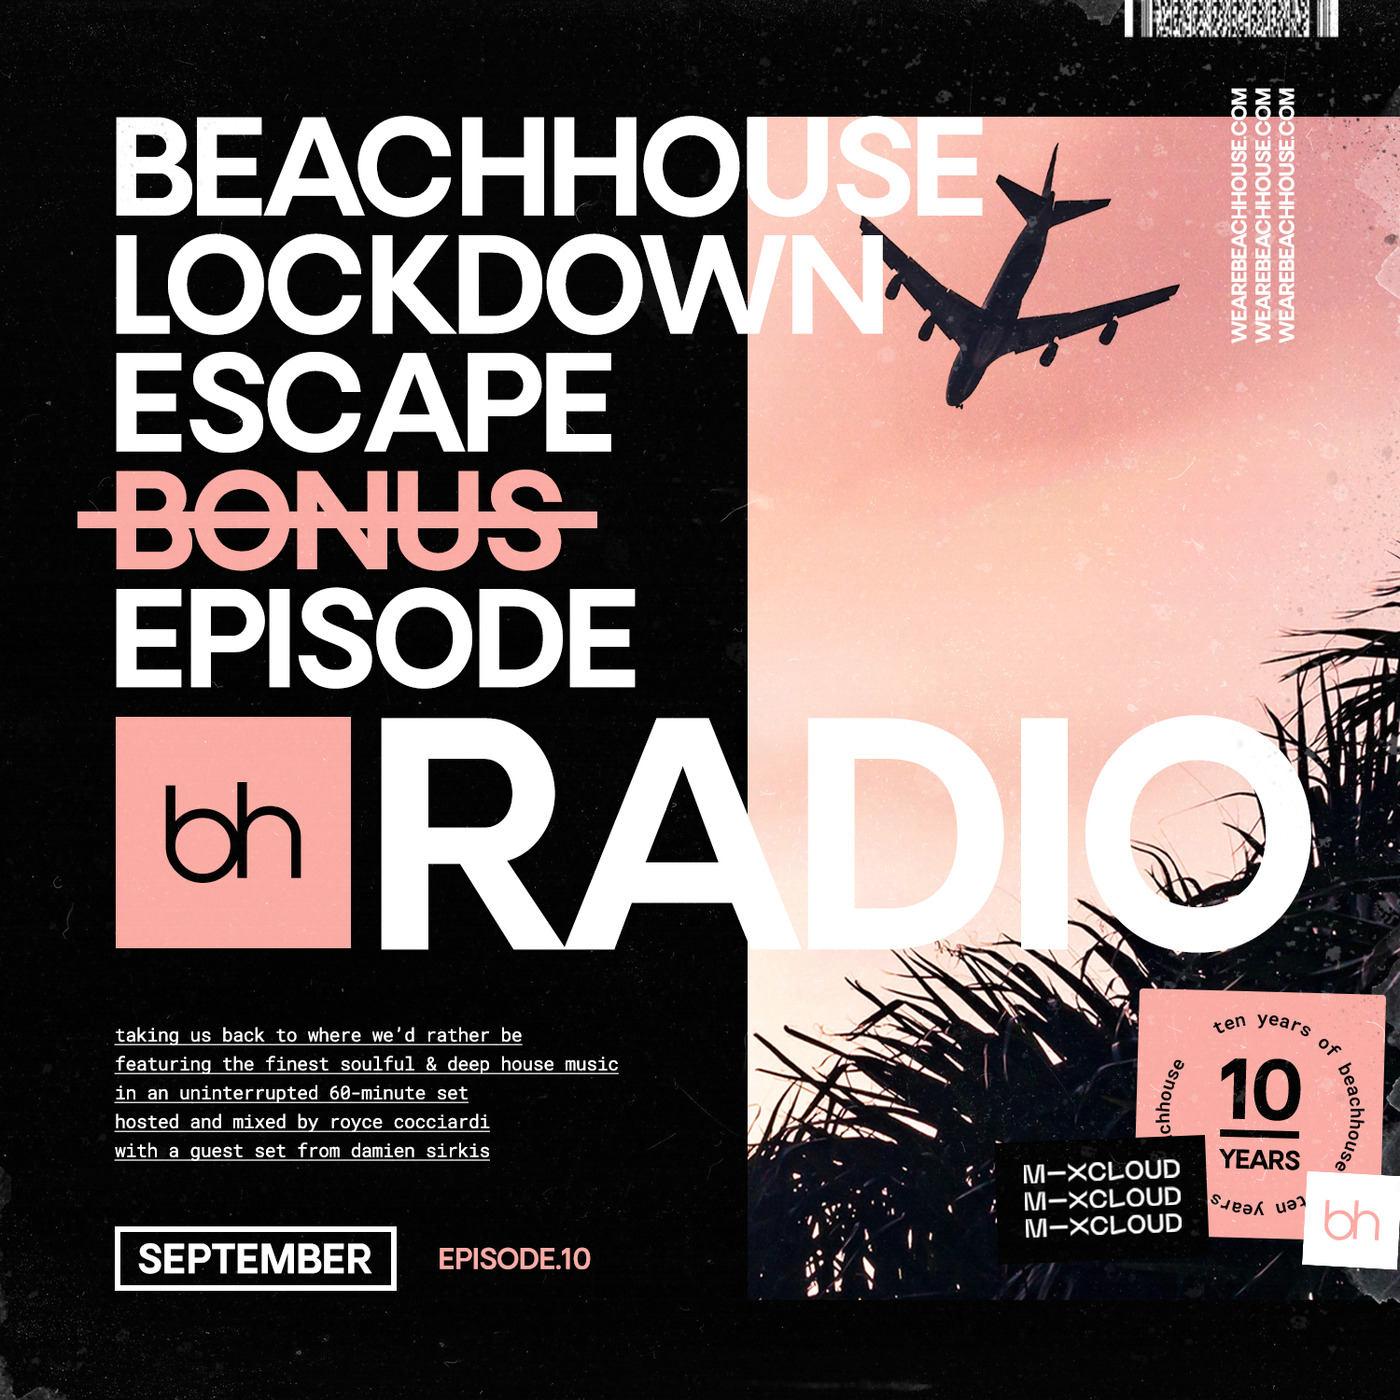 Beachhouse RADIO - September 2020 - Lockdown Escape #2 - Episode 10